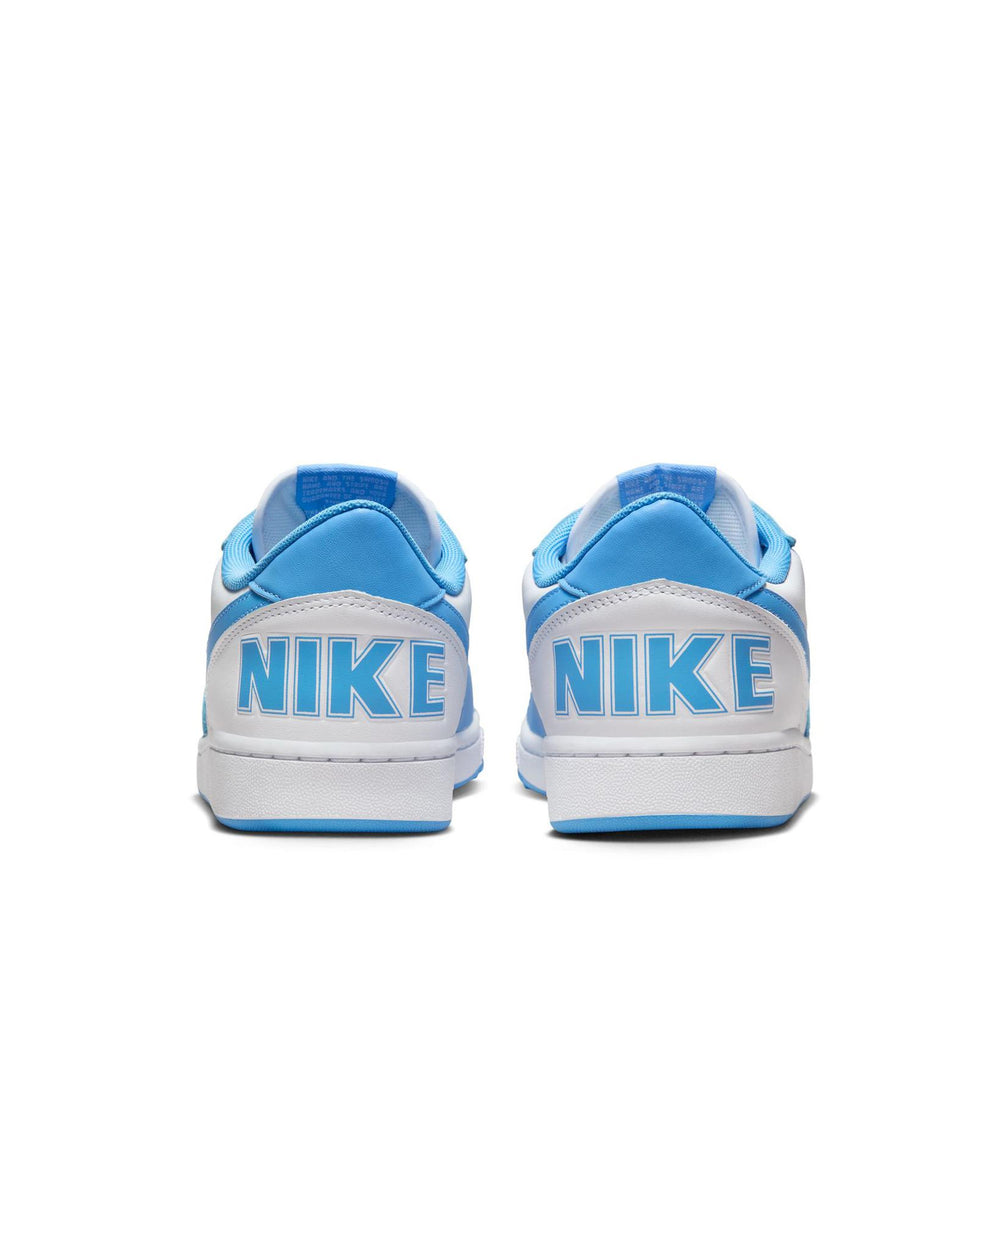 Nike Terminator Low University Blue/White | STASHED